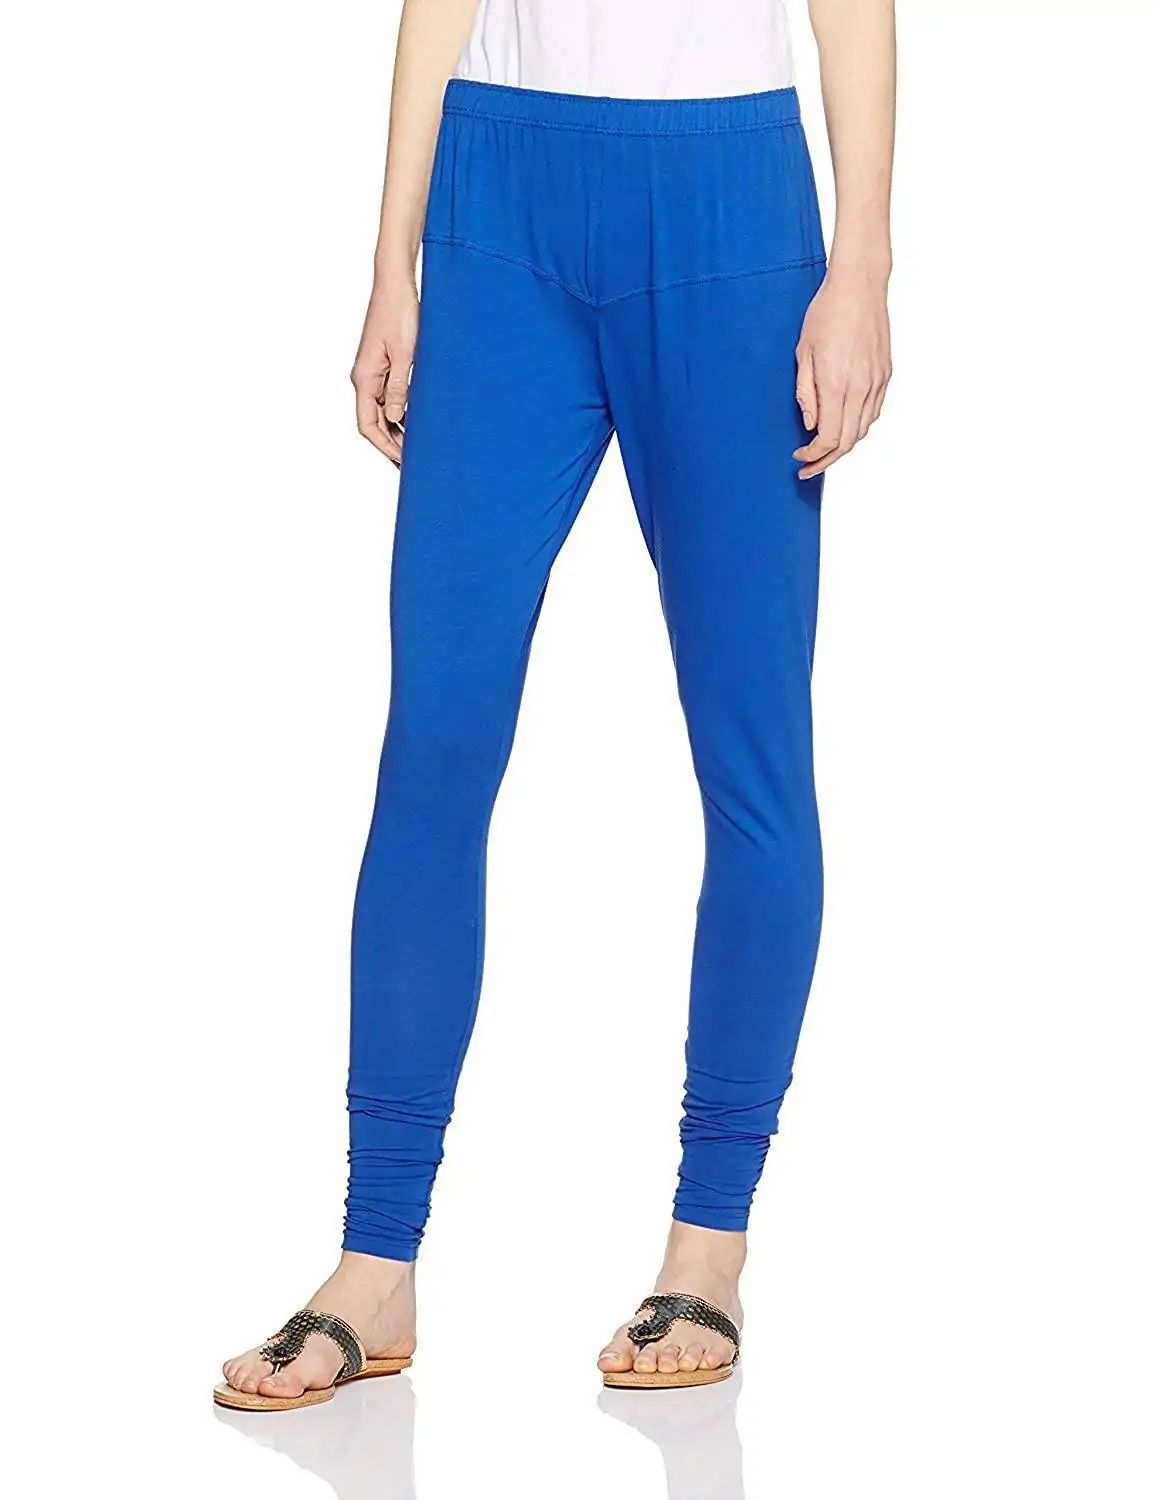 Ink Blue color cotton lycra premium leggings with yoke stitching-LGP41